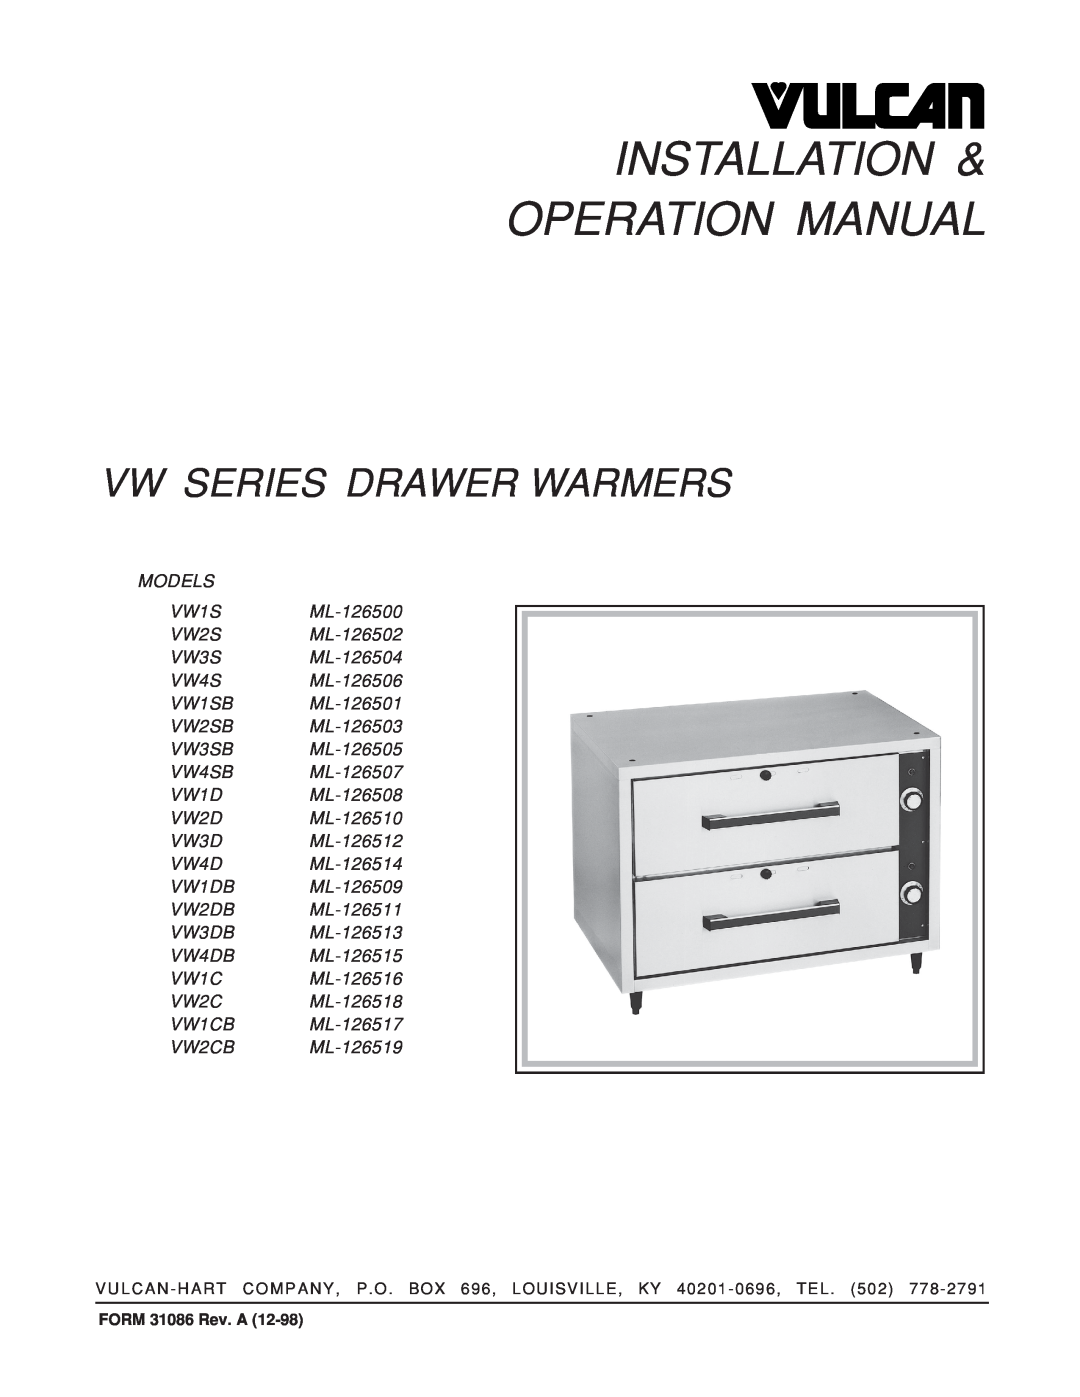 Vulcan-Hart VW1S ML-126500, VW2SB ML-126503, VW2DB ML-126511, VW3D ML-126512 operation manual Vw Series Drawer Warmers 